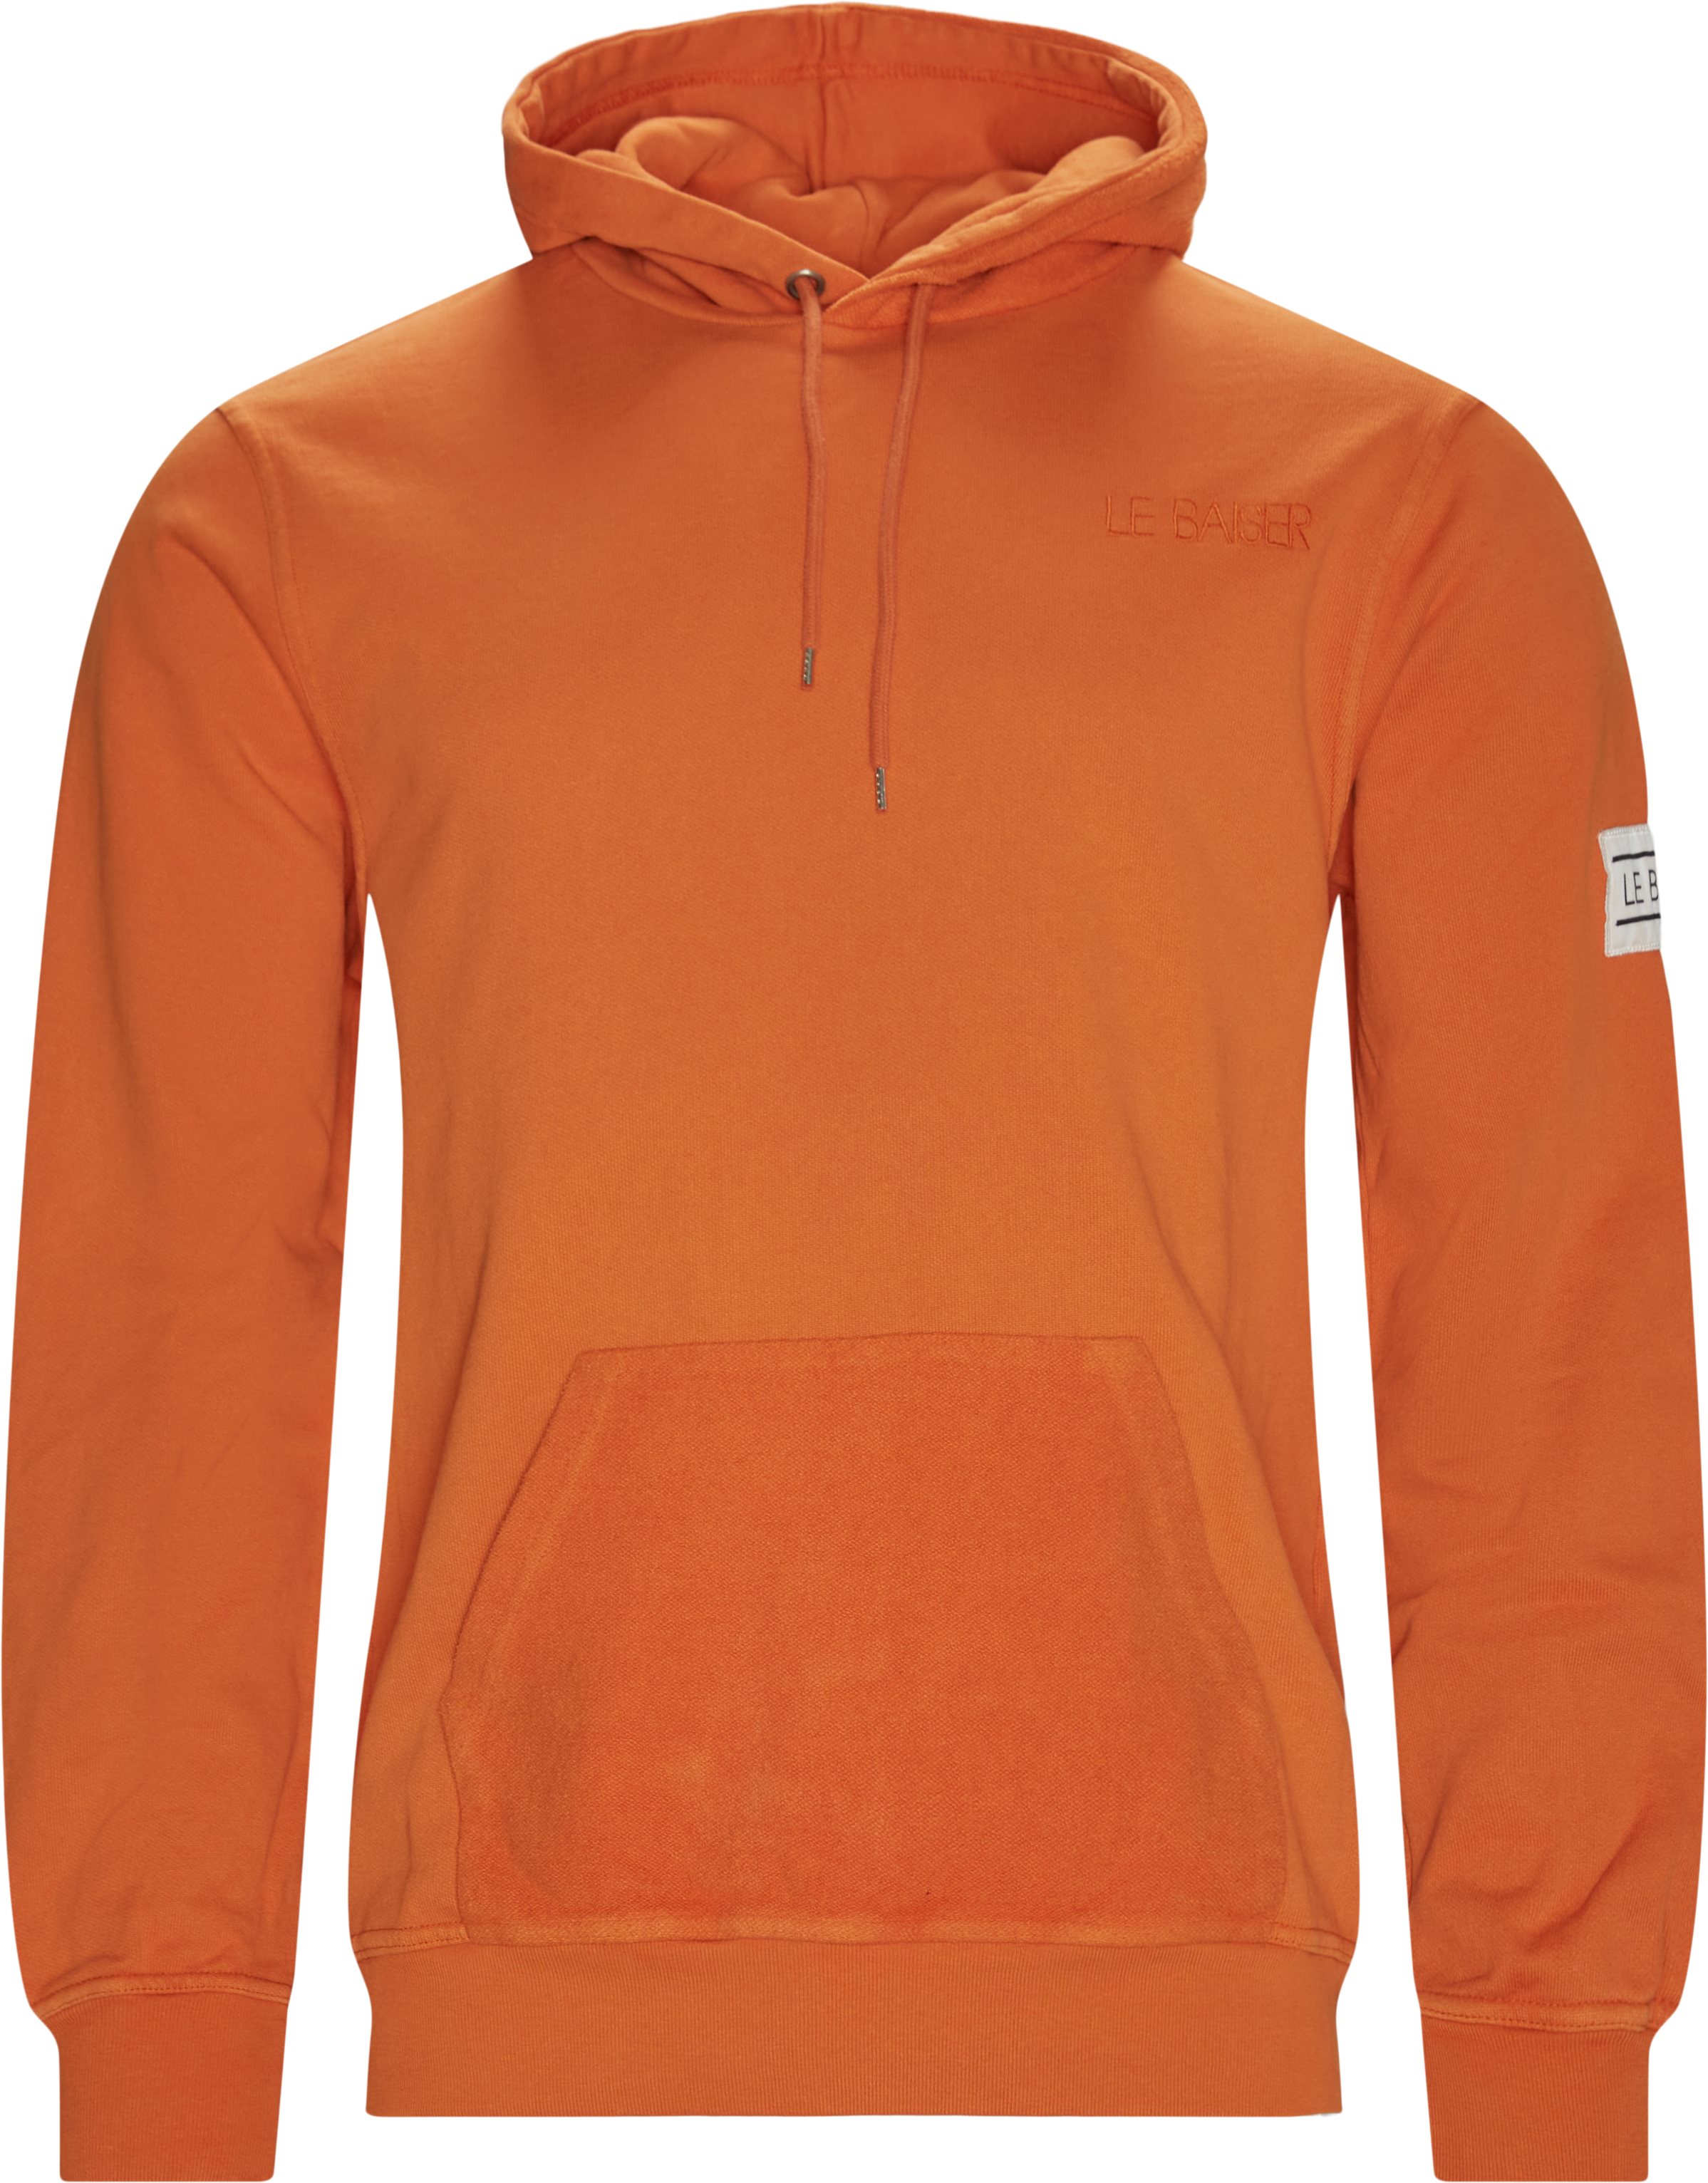 Borgo hoodie - Sweatshirts - Orange